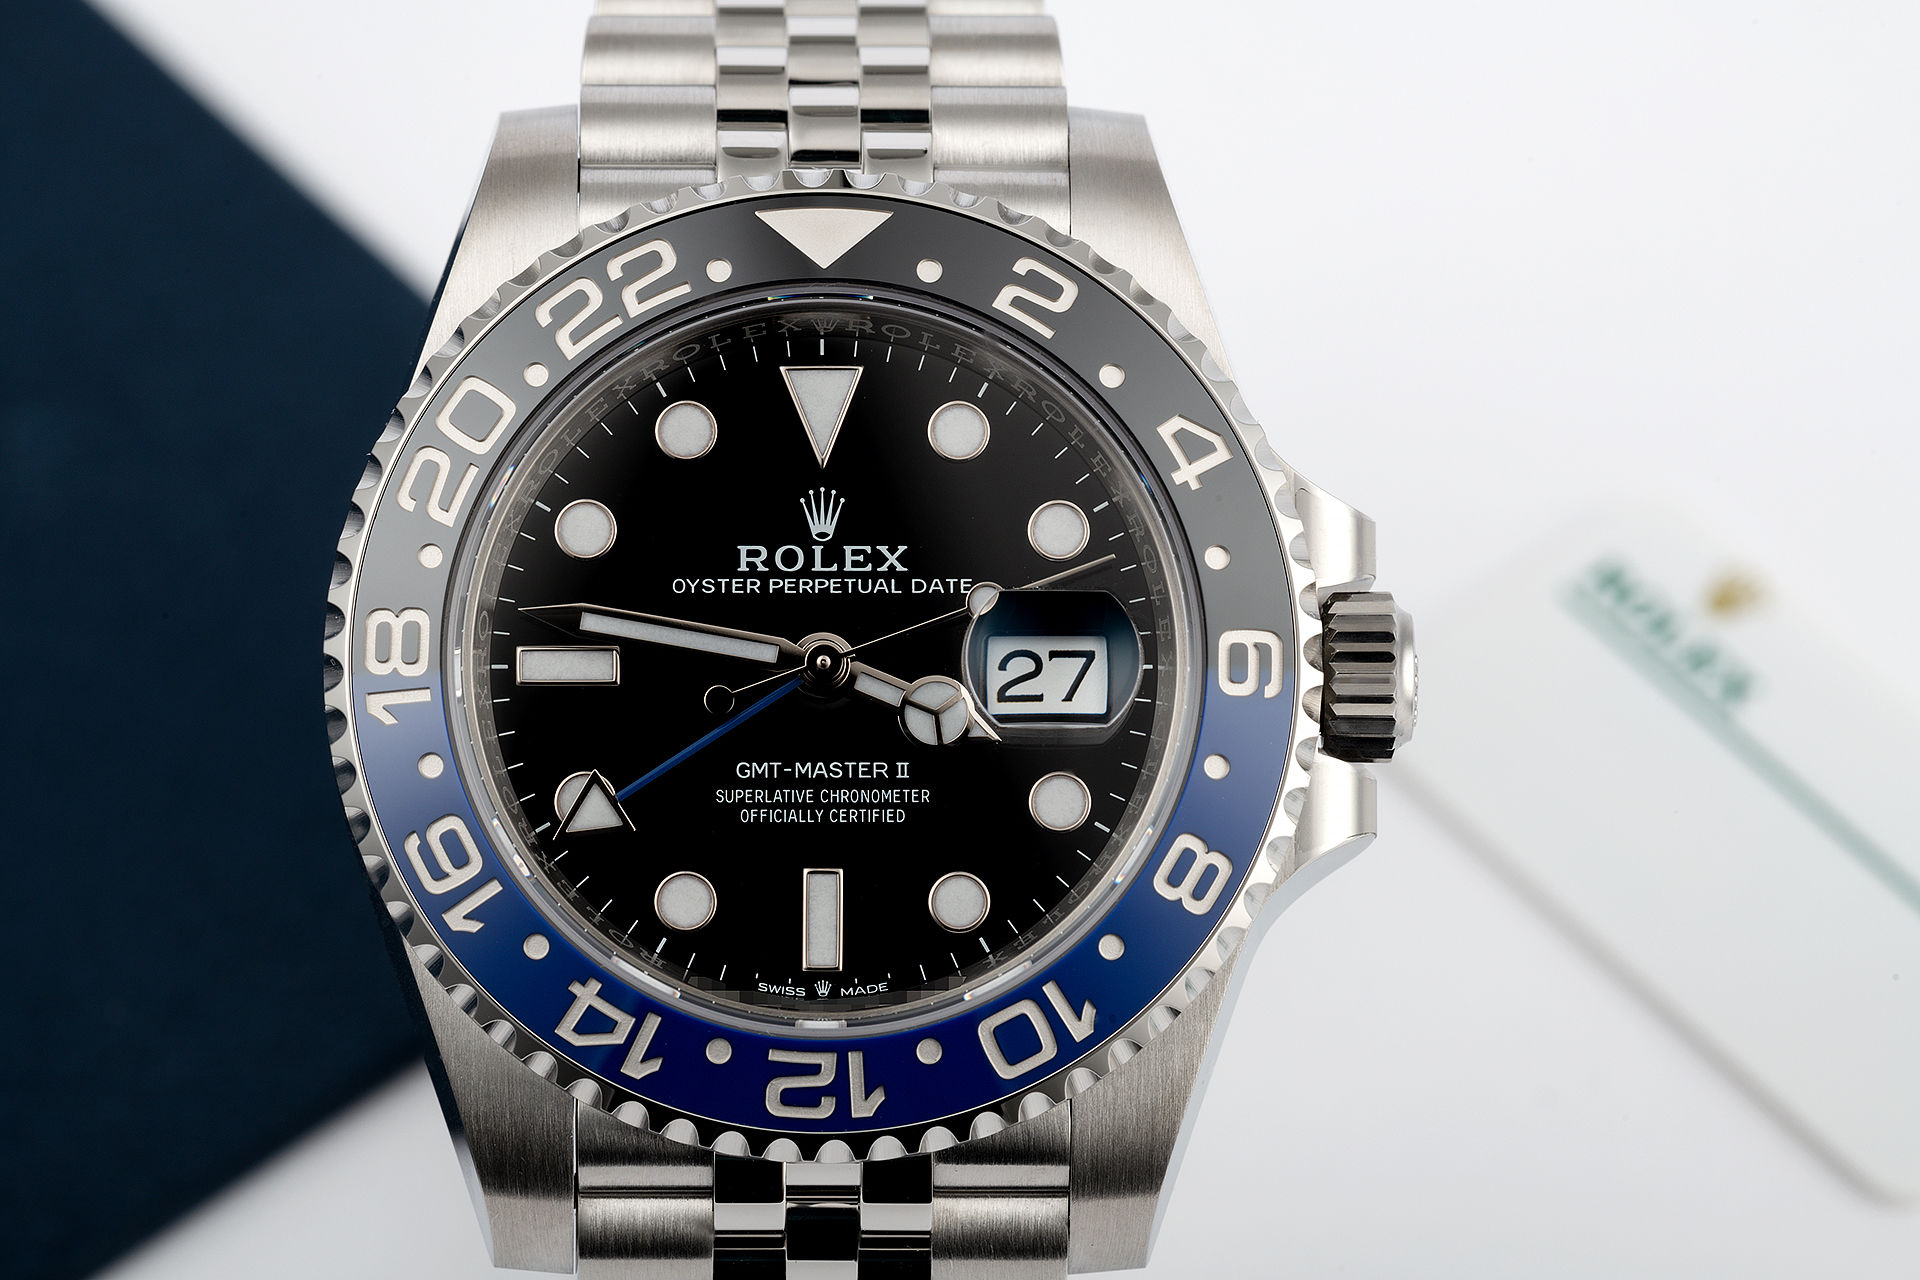 ref 126710BLNR | 'Brand New' 5 Year Warranty | Rolex GMT-Master II